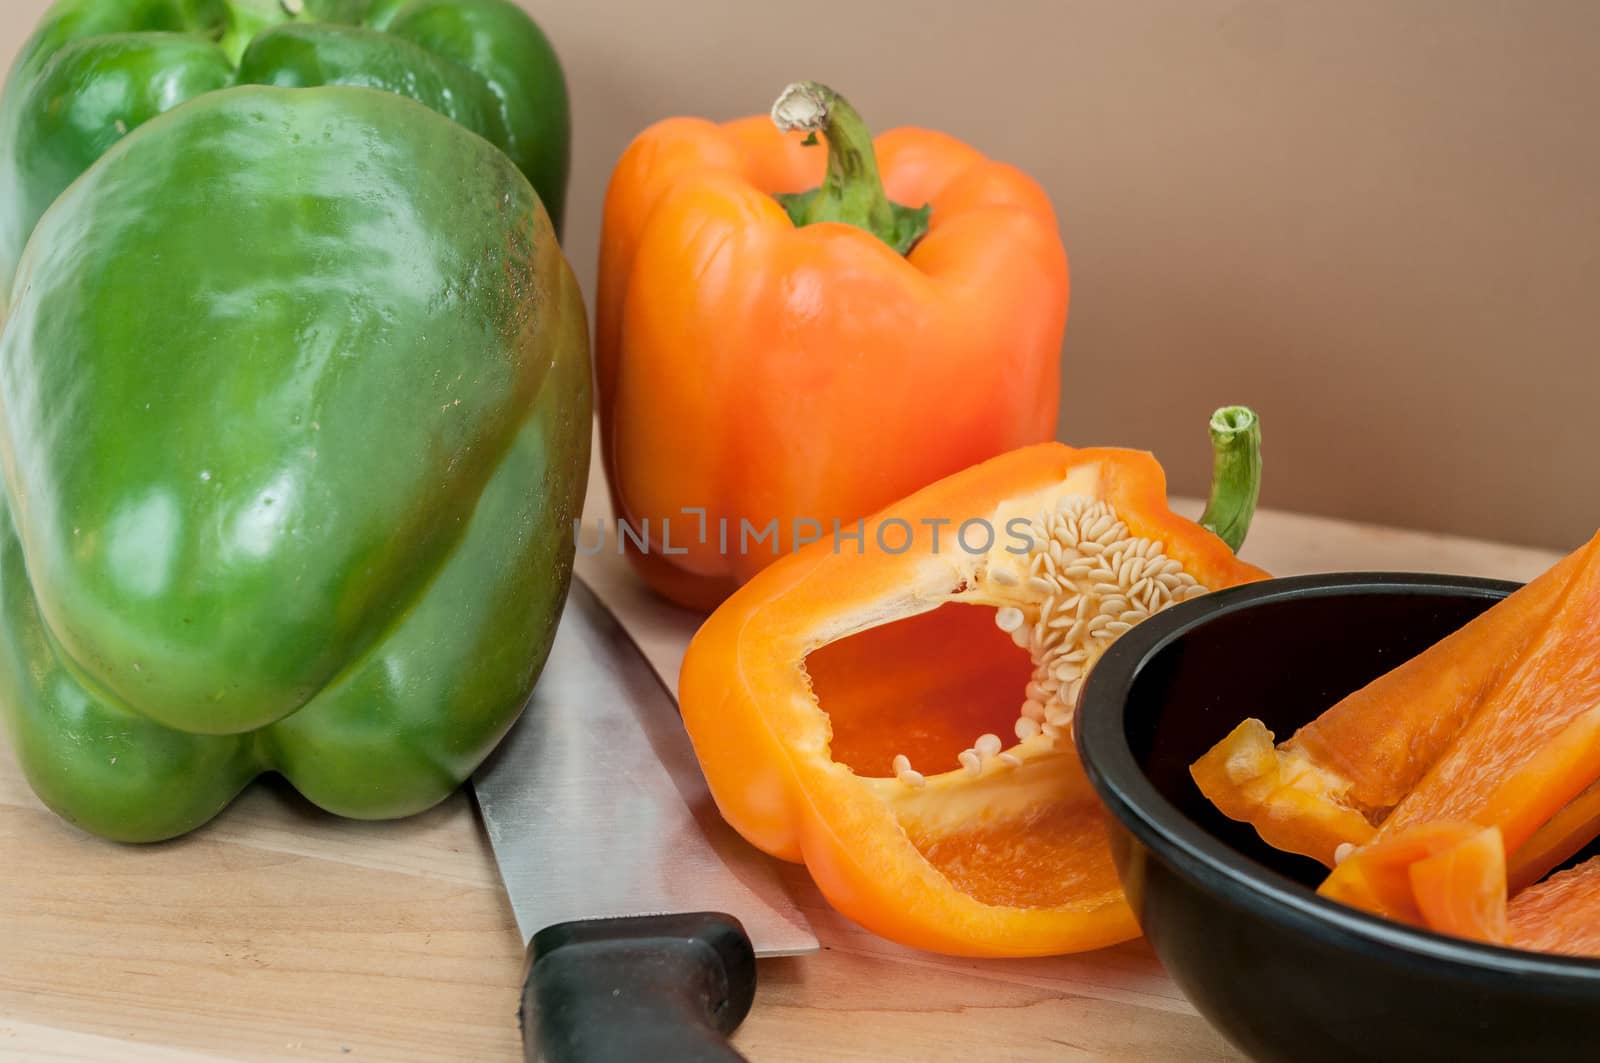 Green and Sliced Orange Pepper  by edcorey